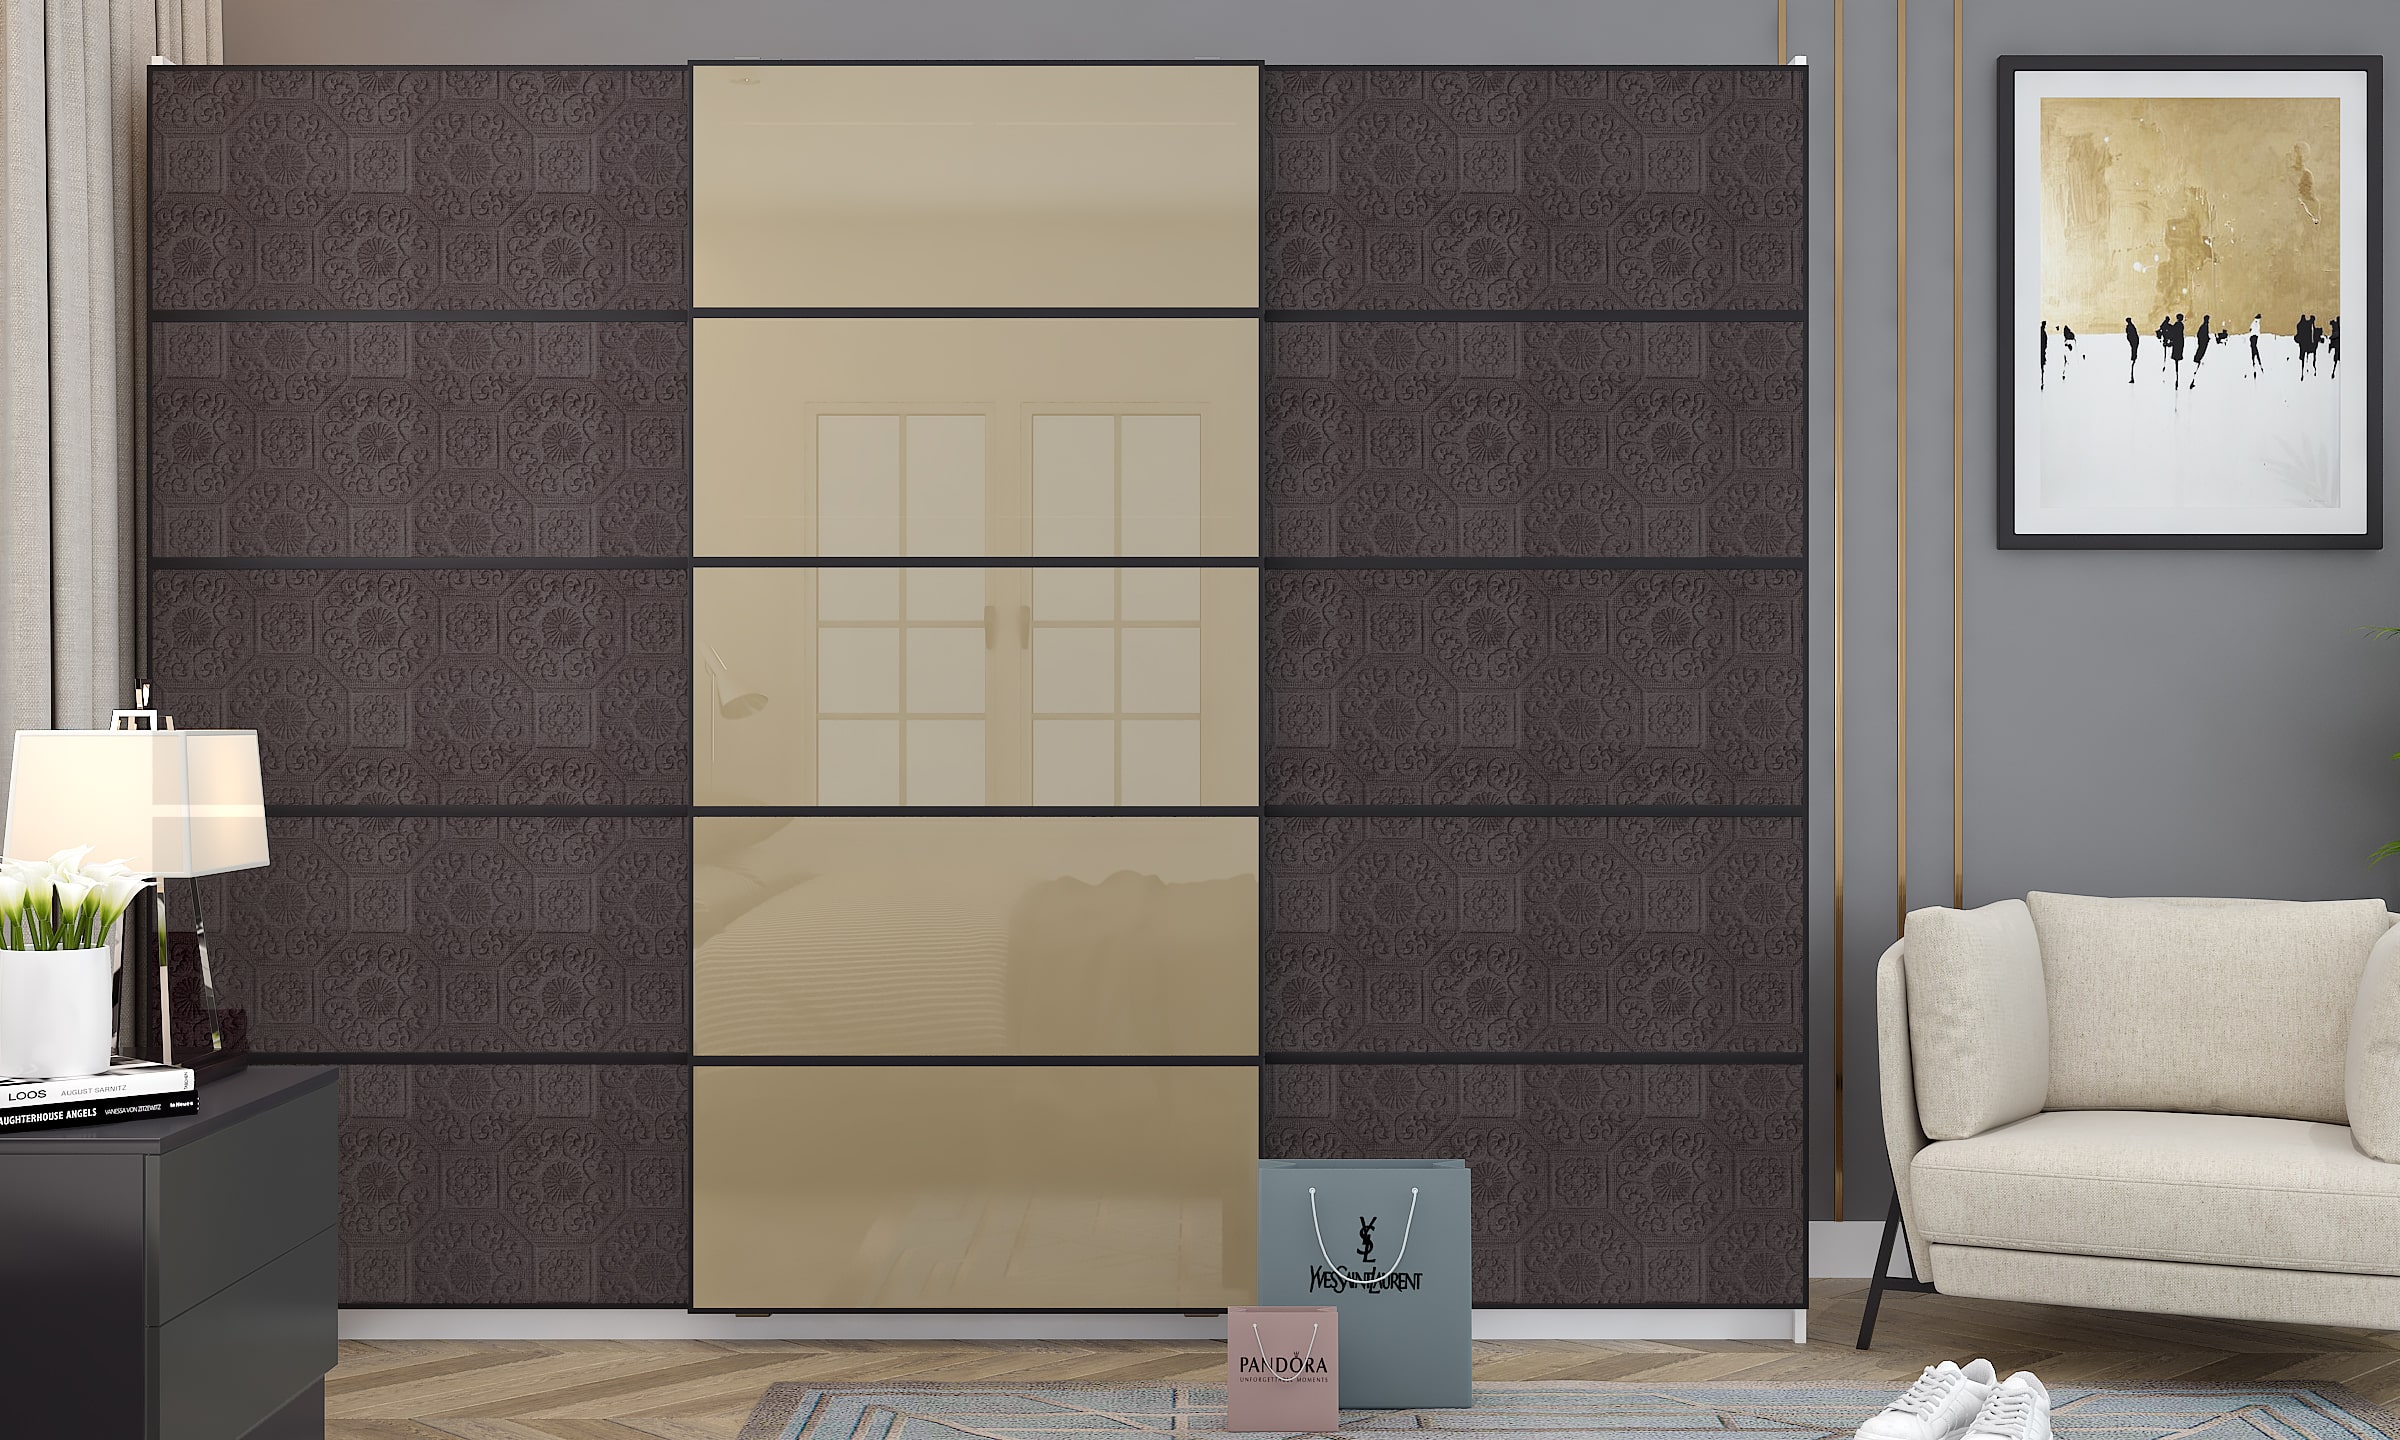 Luxury interior designers designed a sliding door wardrobe with fabric panels in earthy tones